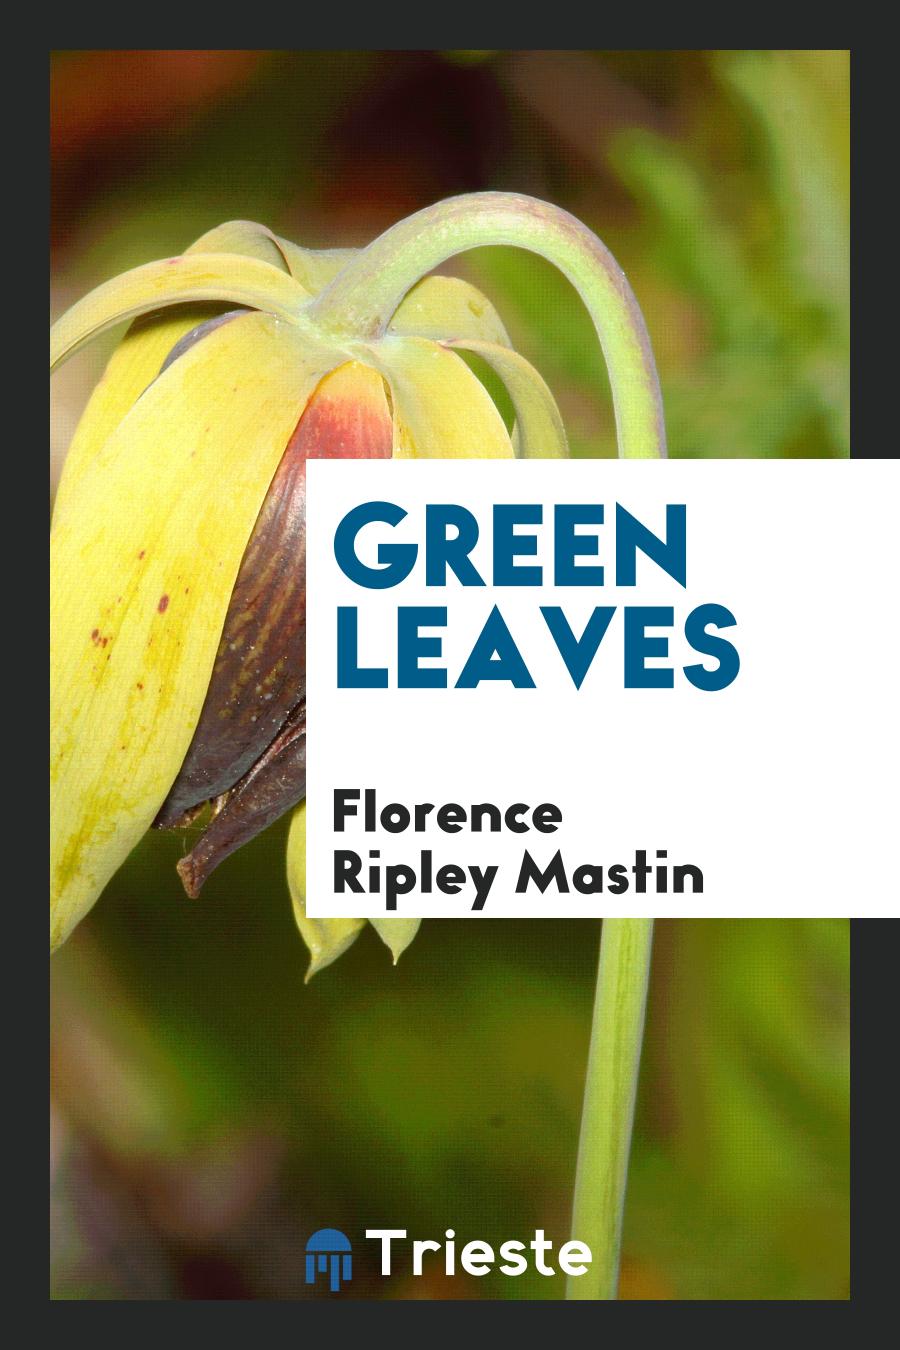 Florence Ripley Mastin - Green leaves